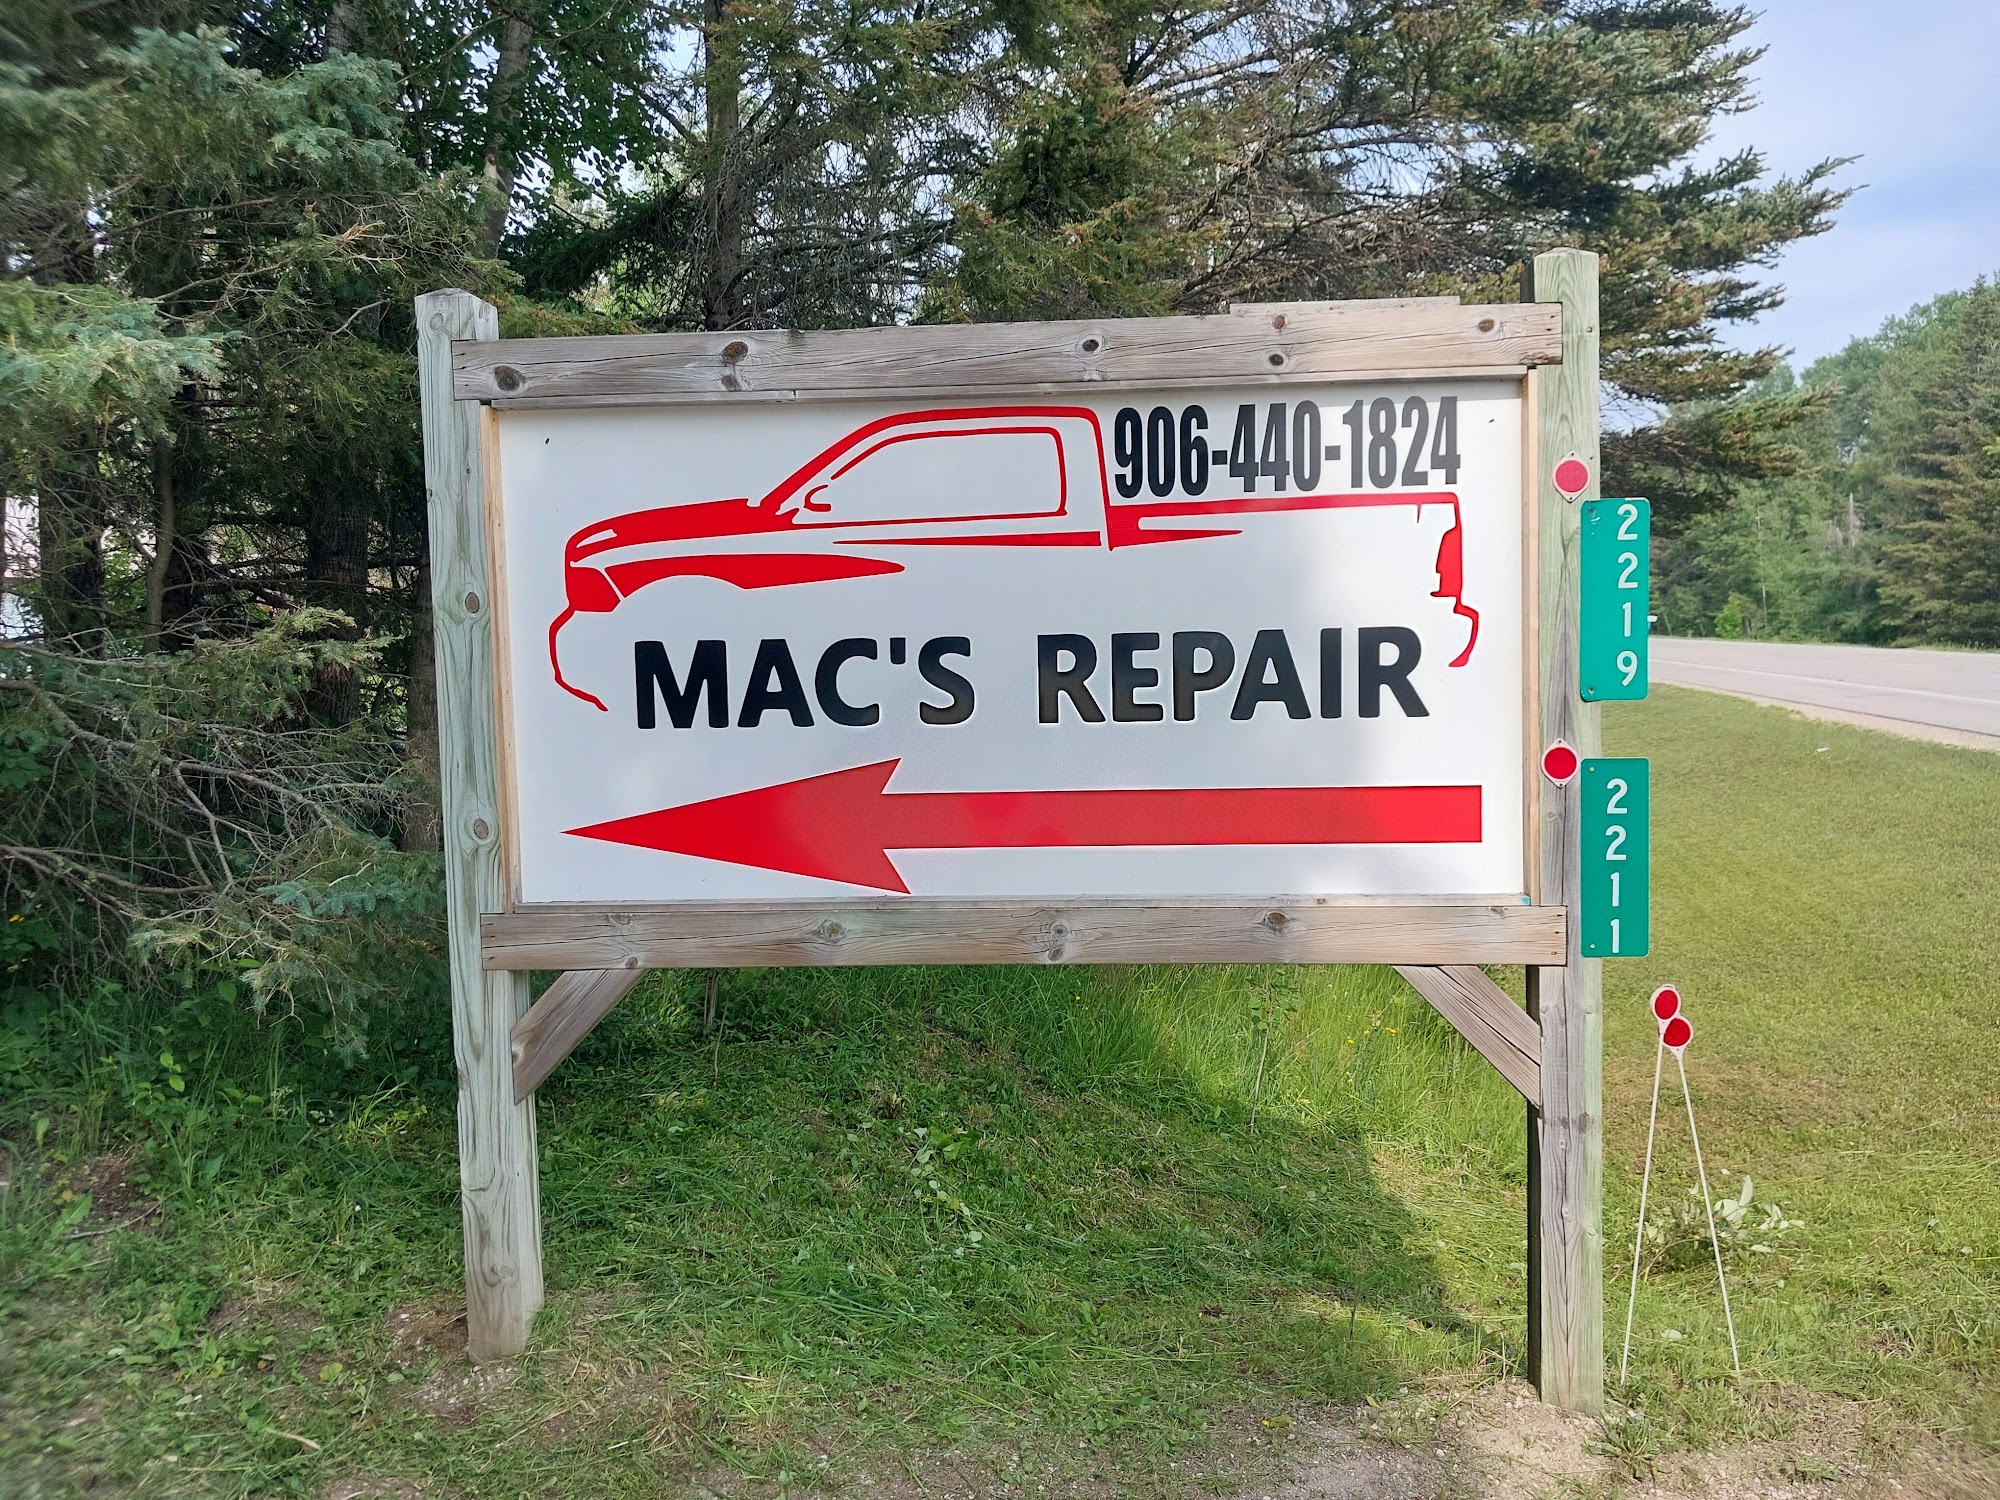 Mac's Repair 2211 M-134, Cedarville Michigan 49719